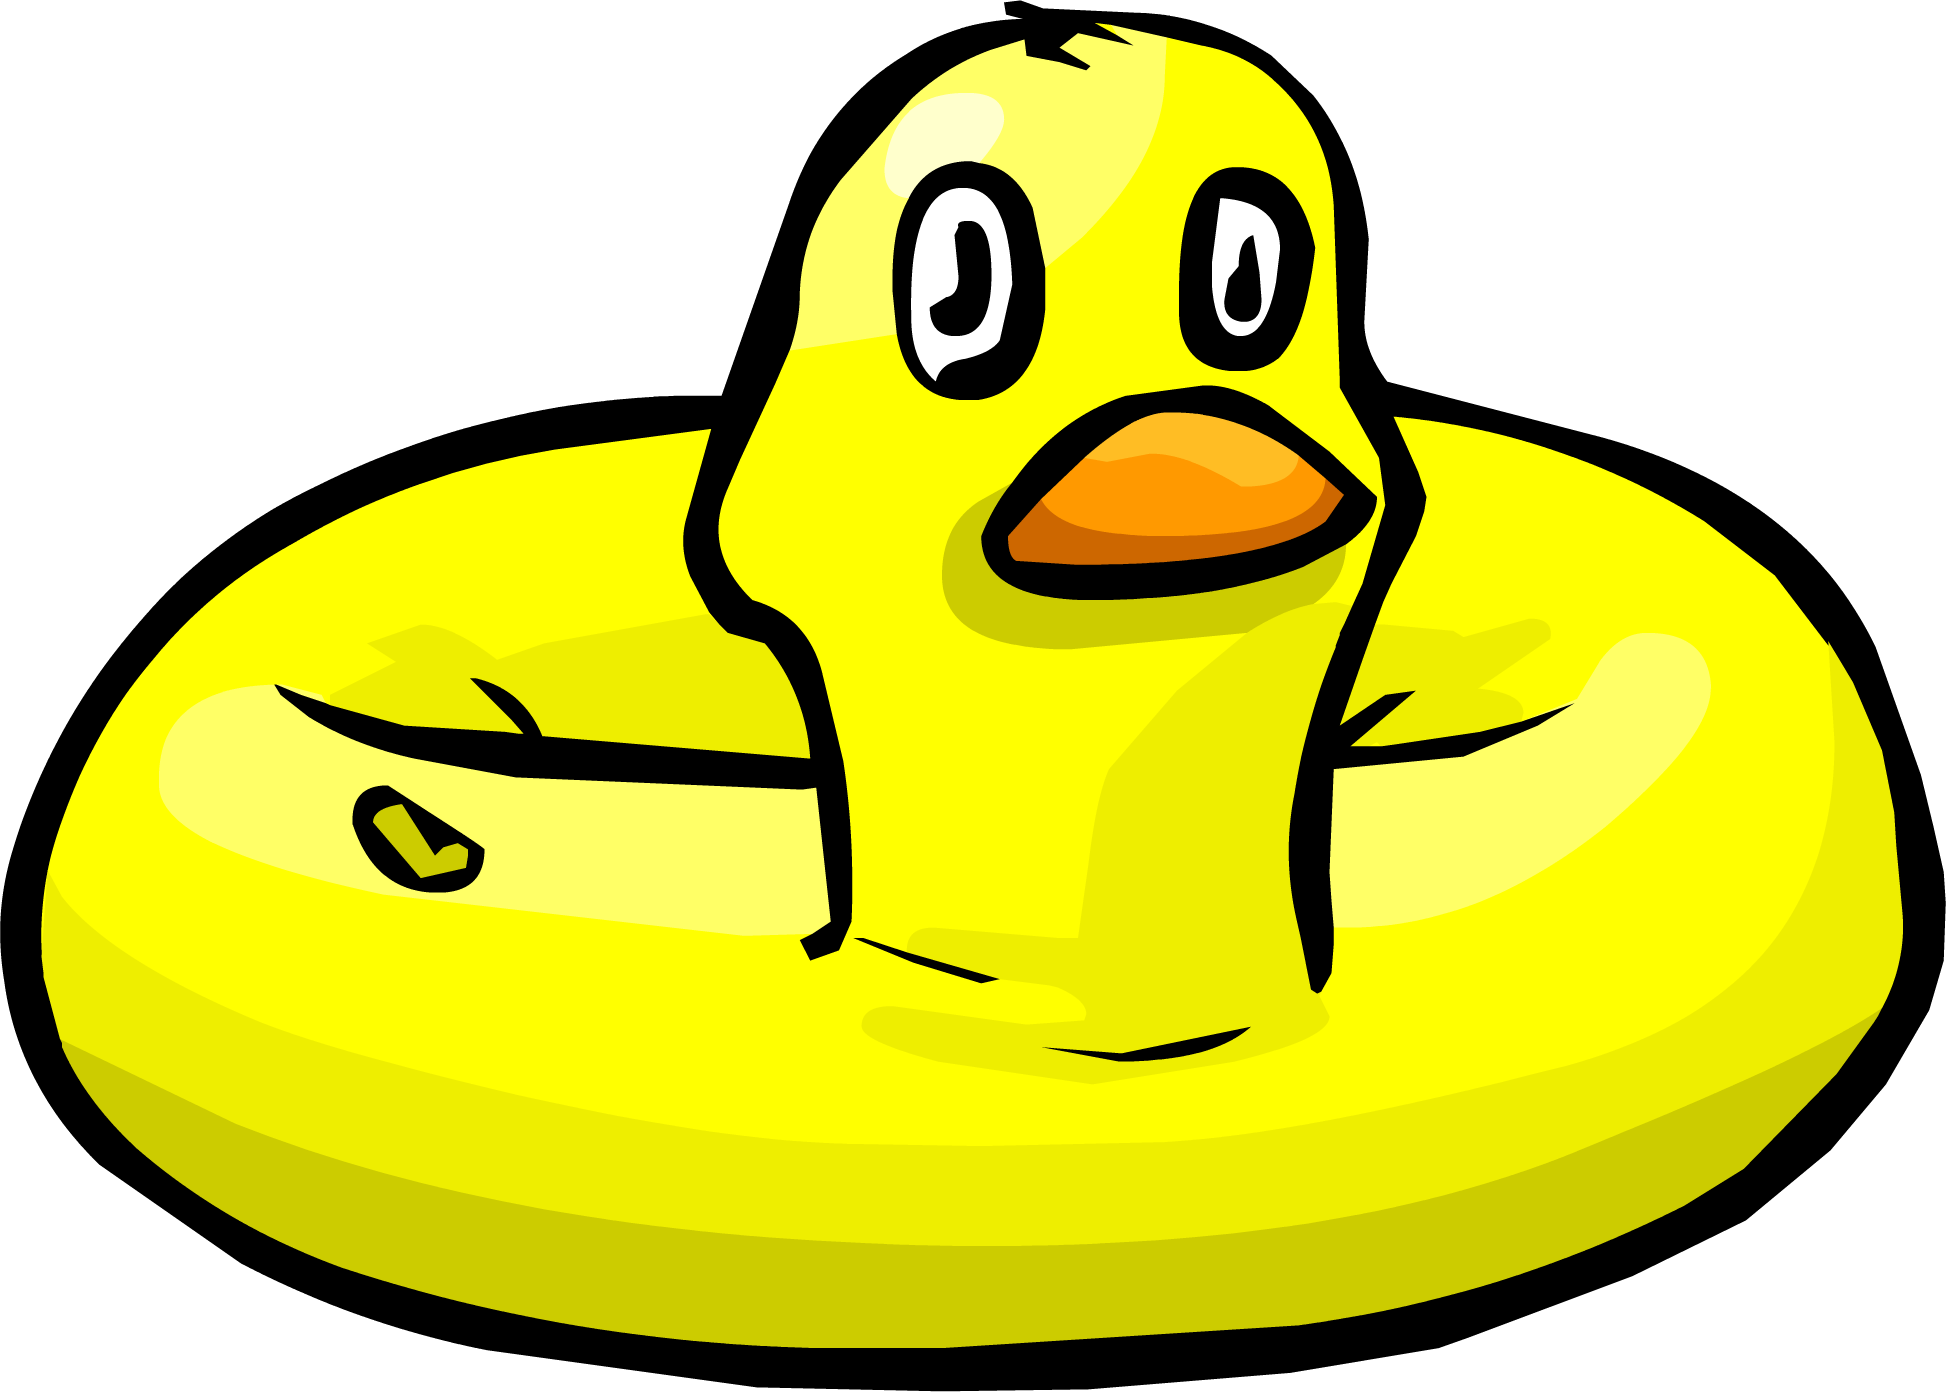 duckling clipart yellow duckling